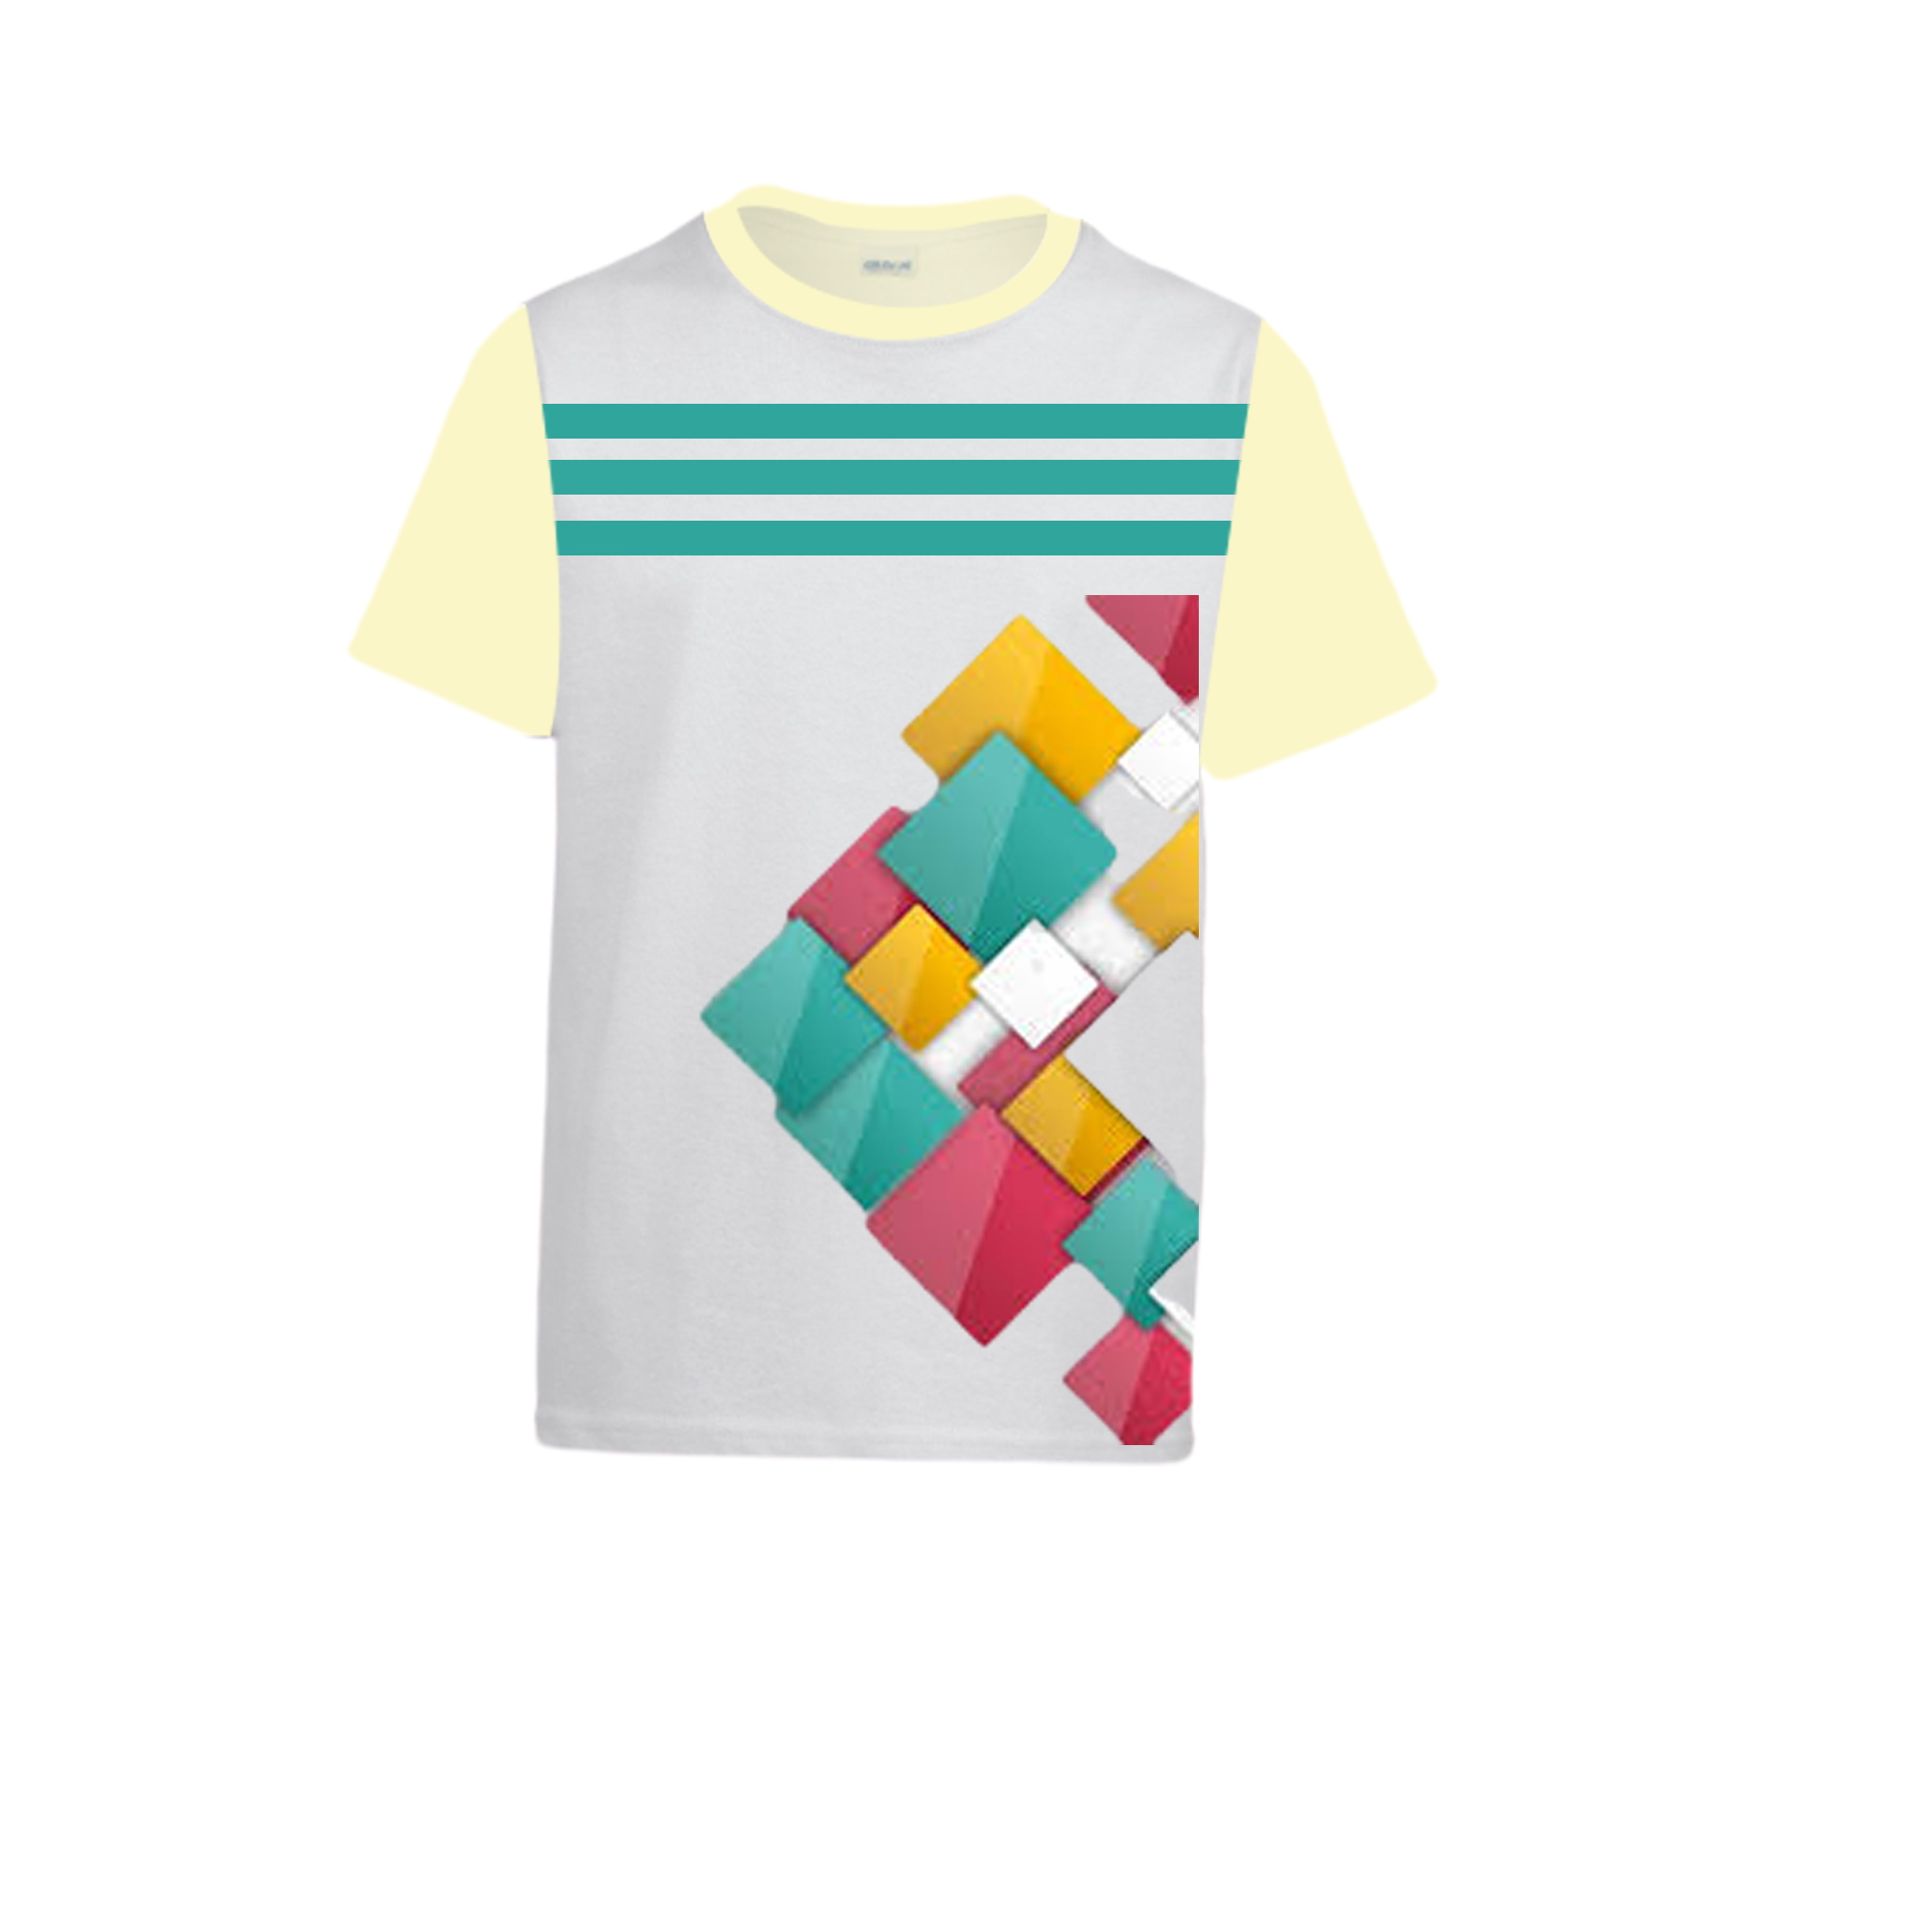 I will do minimalist typography t shirt design for $1 - SEOClerks